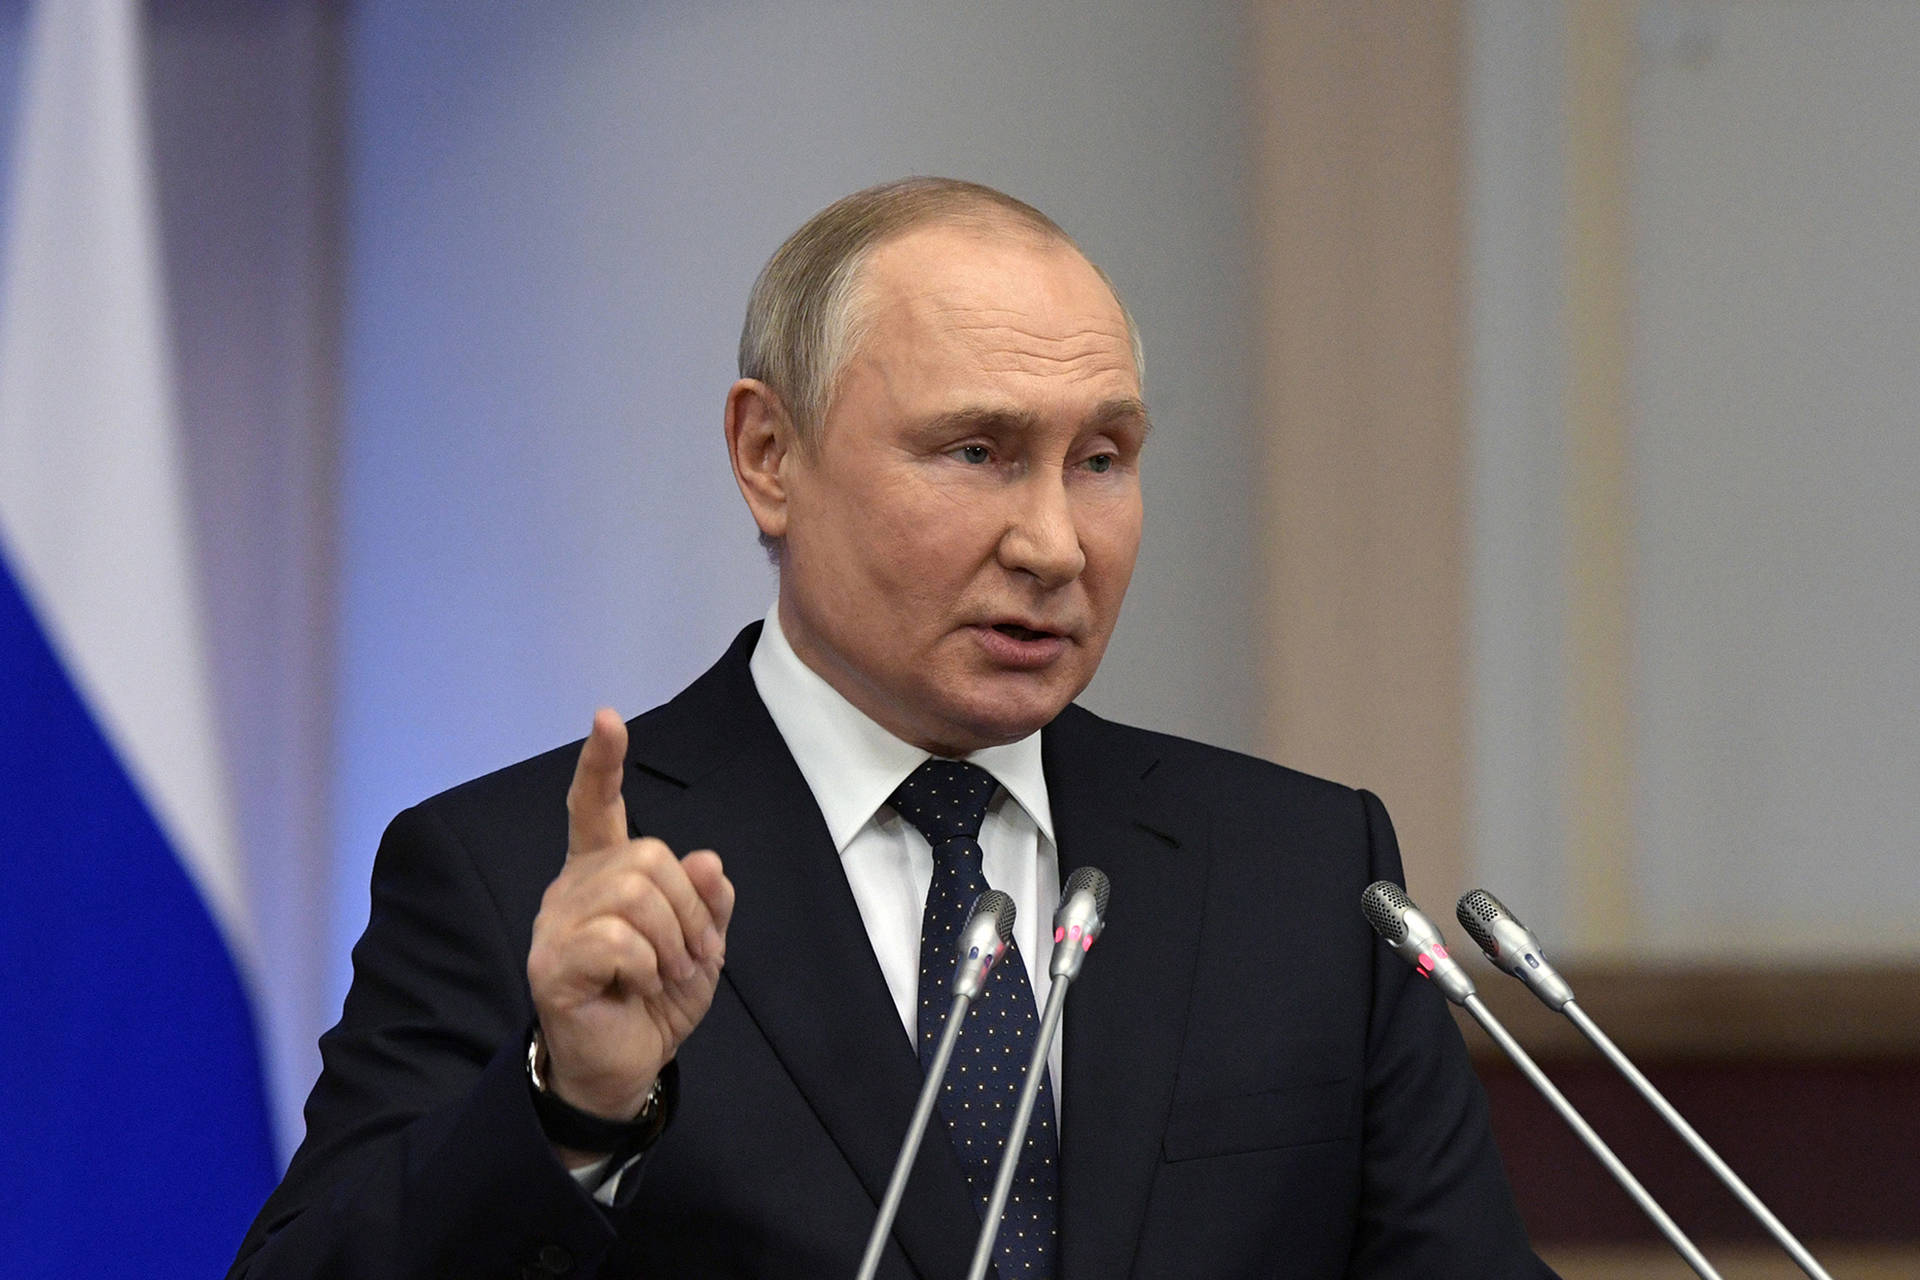 Vladimir Putin Pointing Index Finger Up Wallpaper